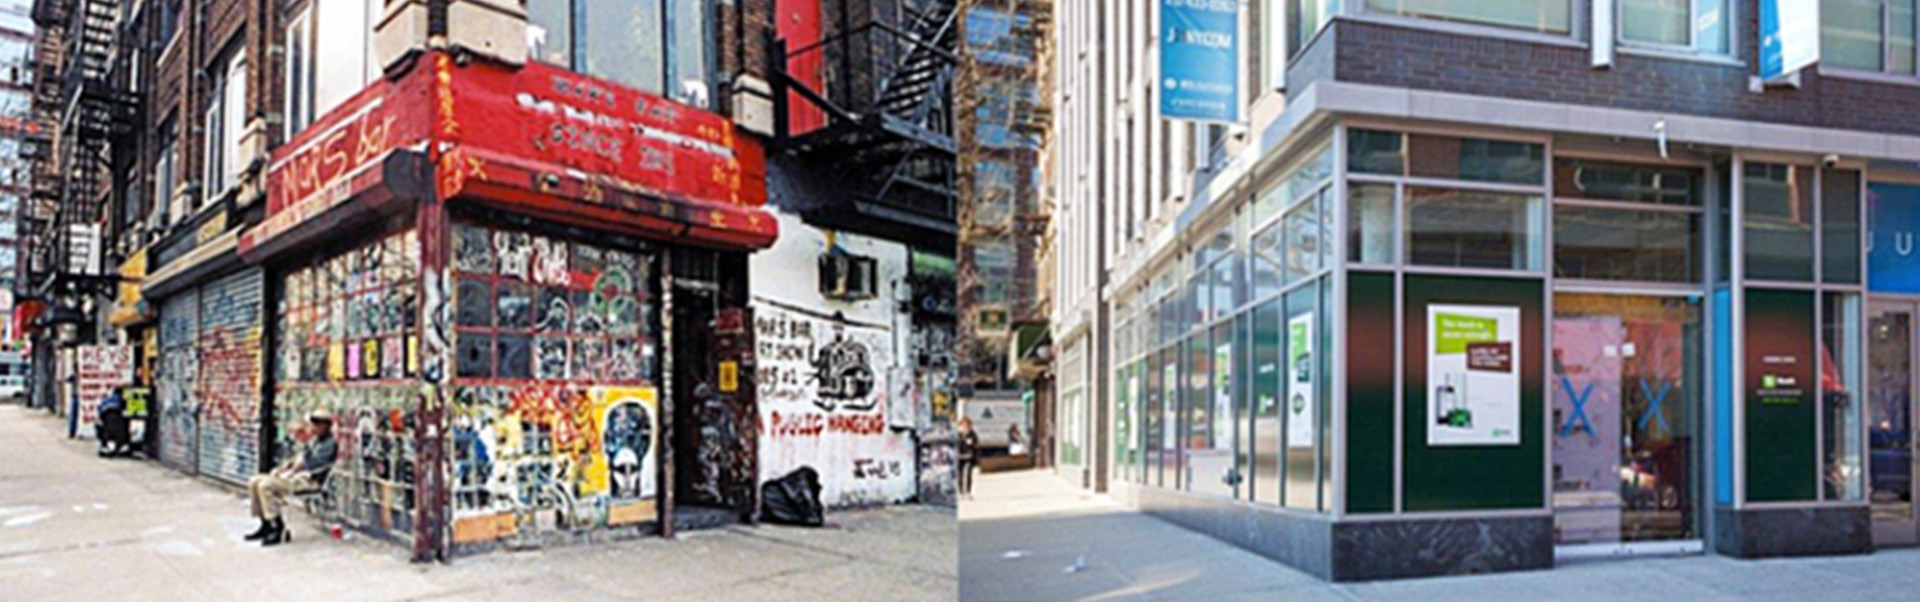 Gentrification in New York City